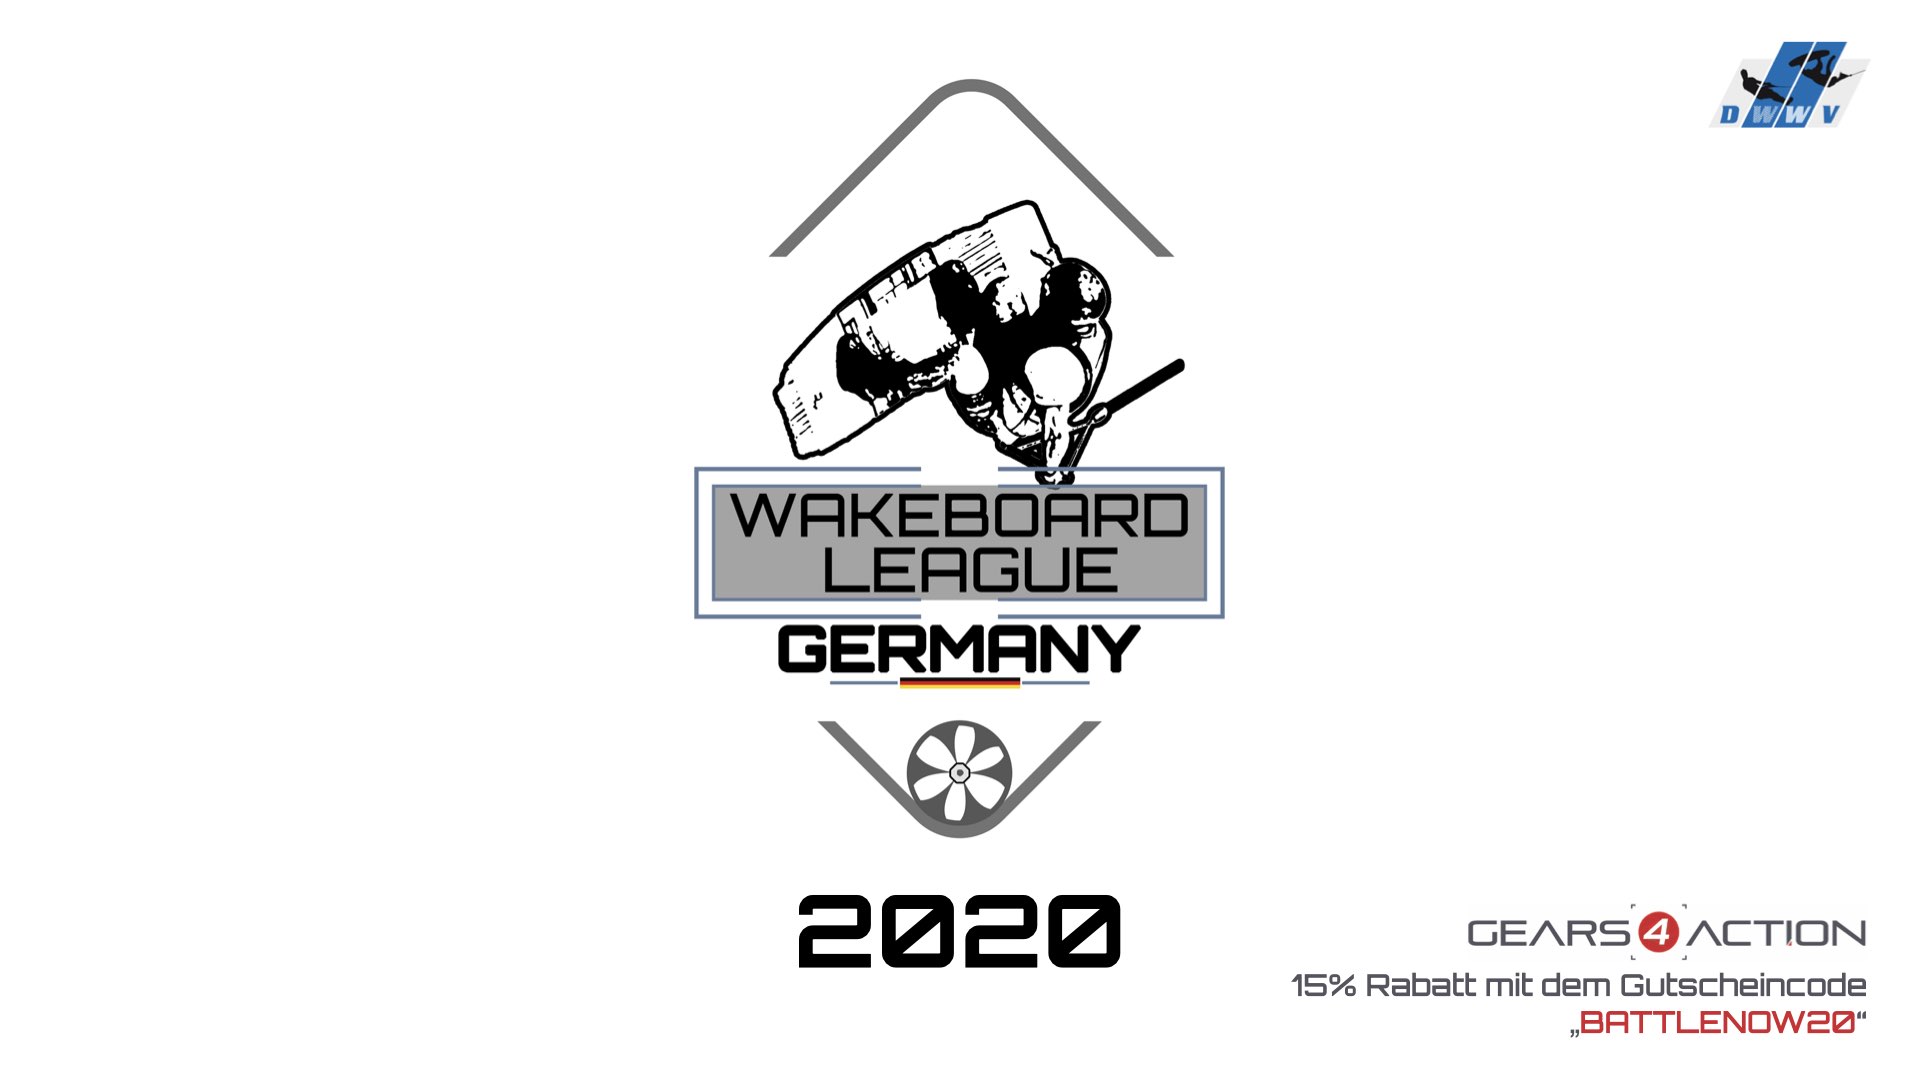 DWWV Wakeboard League Germany - Battle 7 - Best Nosepress/Tailpress-Combo